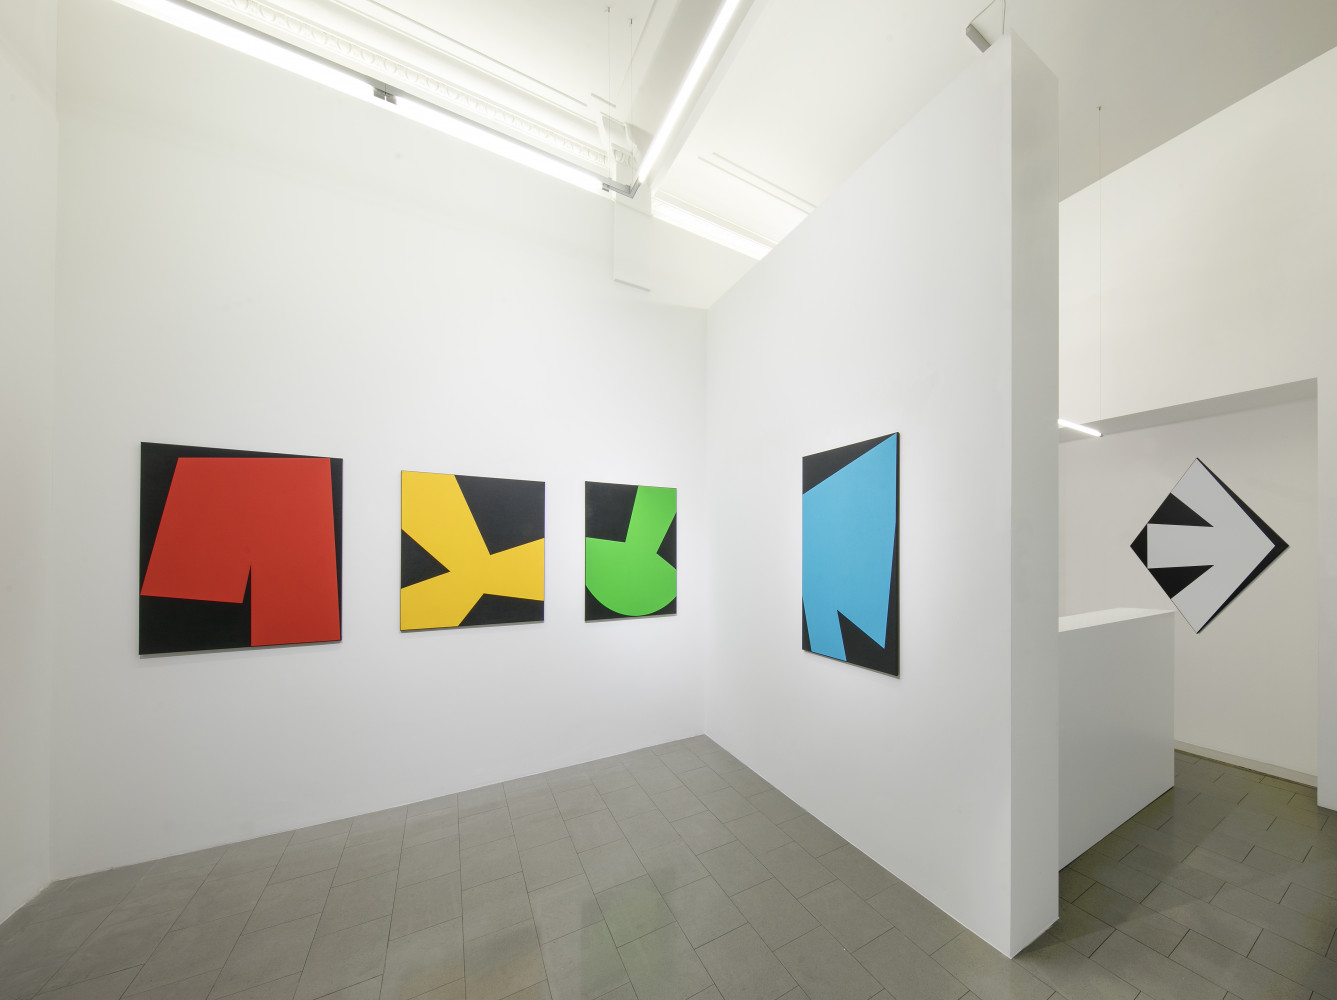 Livio Bernasconi, ‘LIVIO BERNASCONI’, Installation view, Buchmann Lugano, 2020